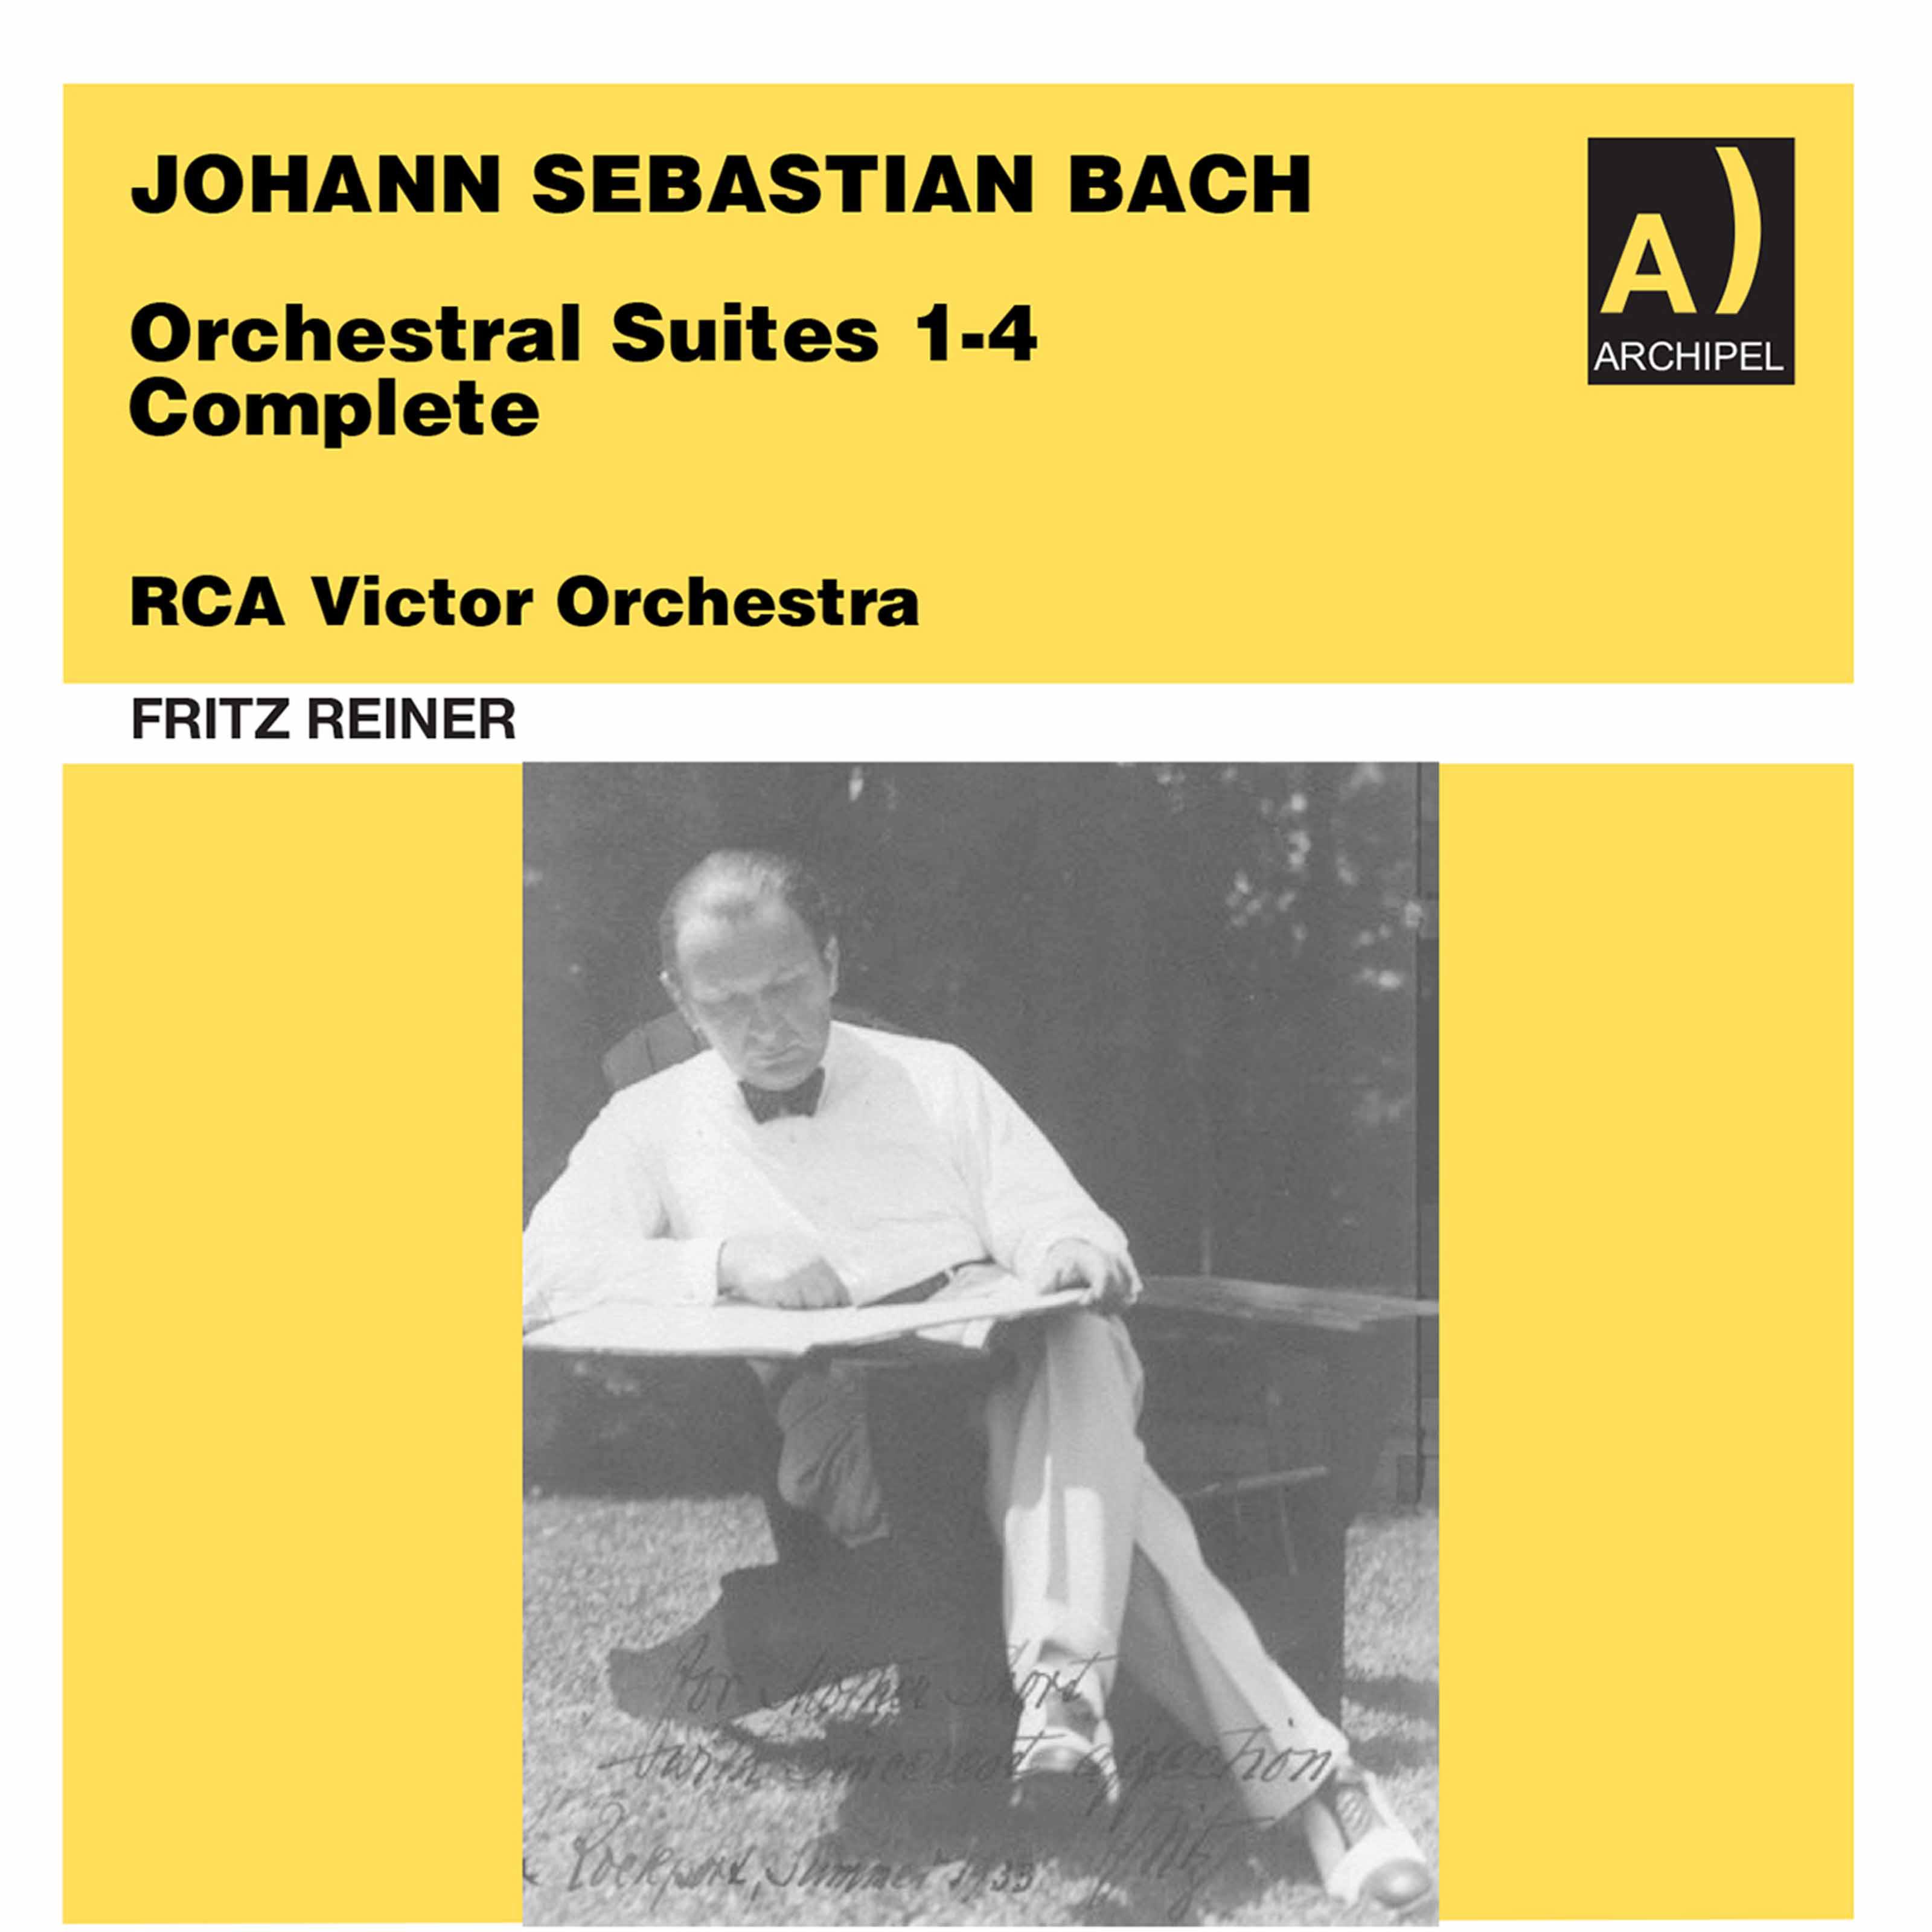 RCA Victor Orchestra - Orchestral Suite No. 4 in D Major, BWV 1069:IV. Menuet 1 - Menuet 2